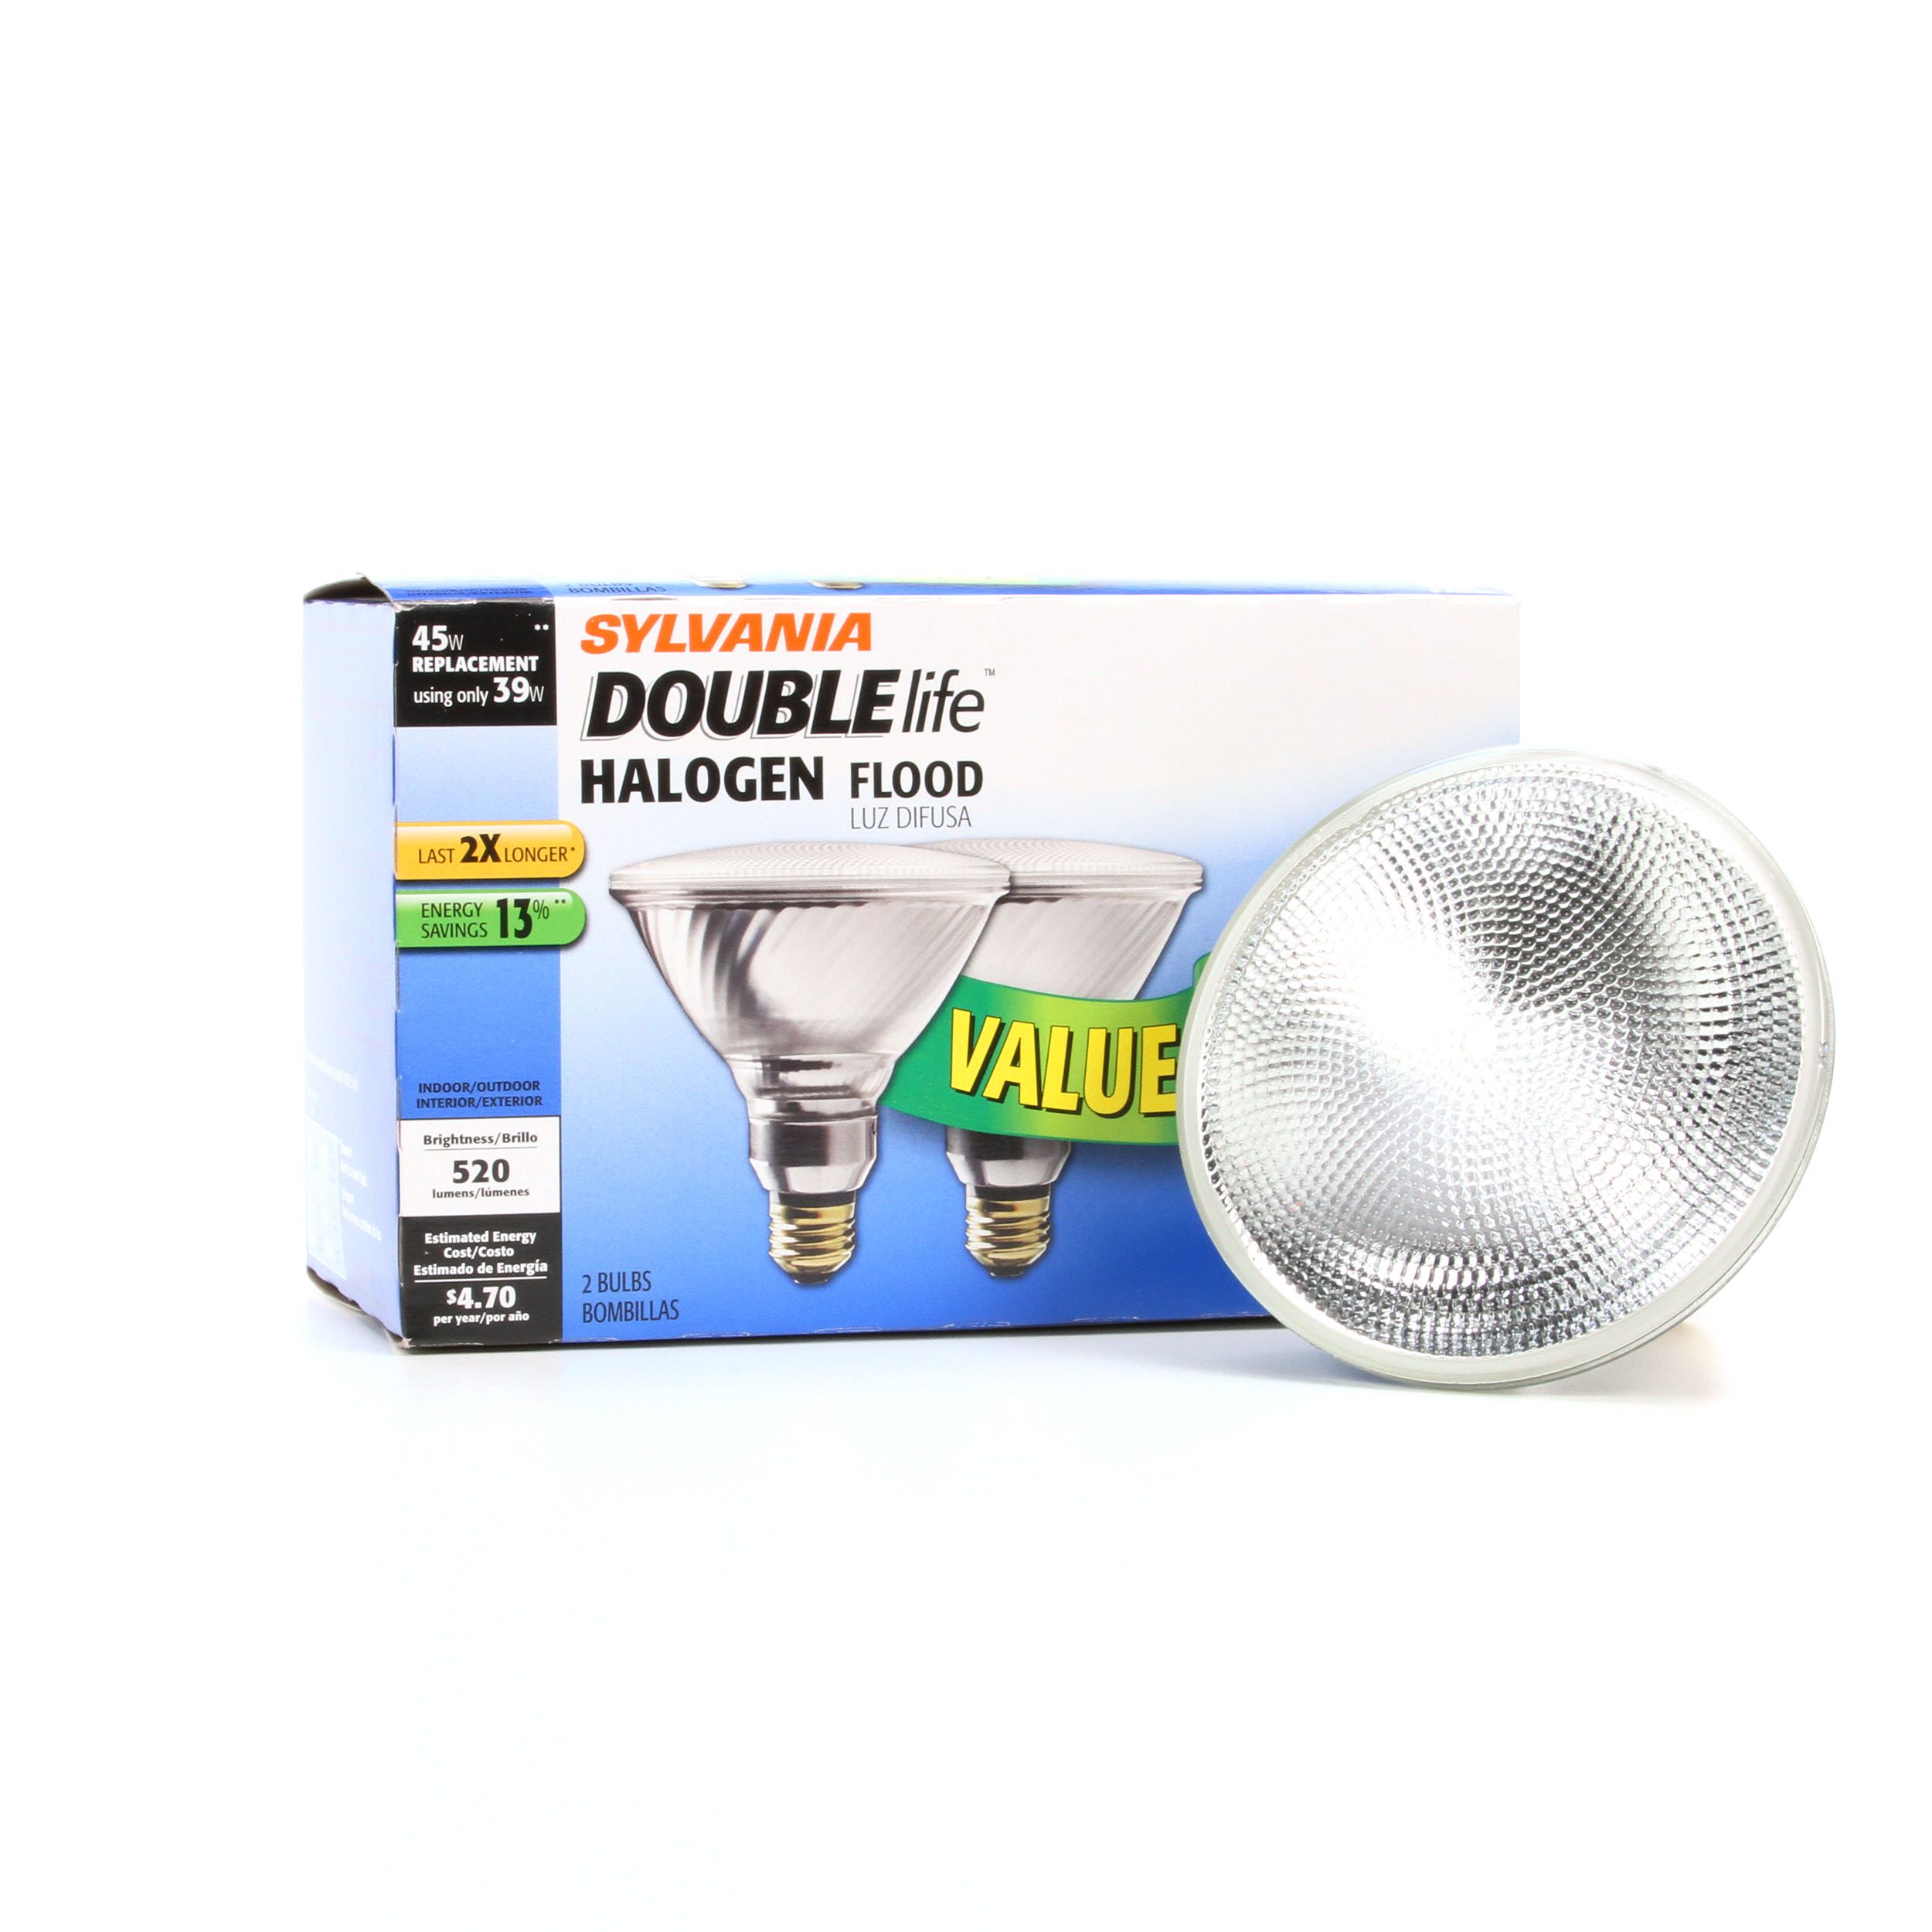 2x 35W MR16 GU5.3 12V Halogen Dichroic UV Filter Dimmable Spot Light Bulbs Lamps 